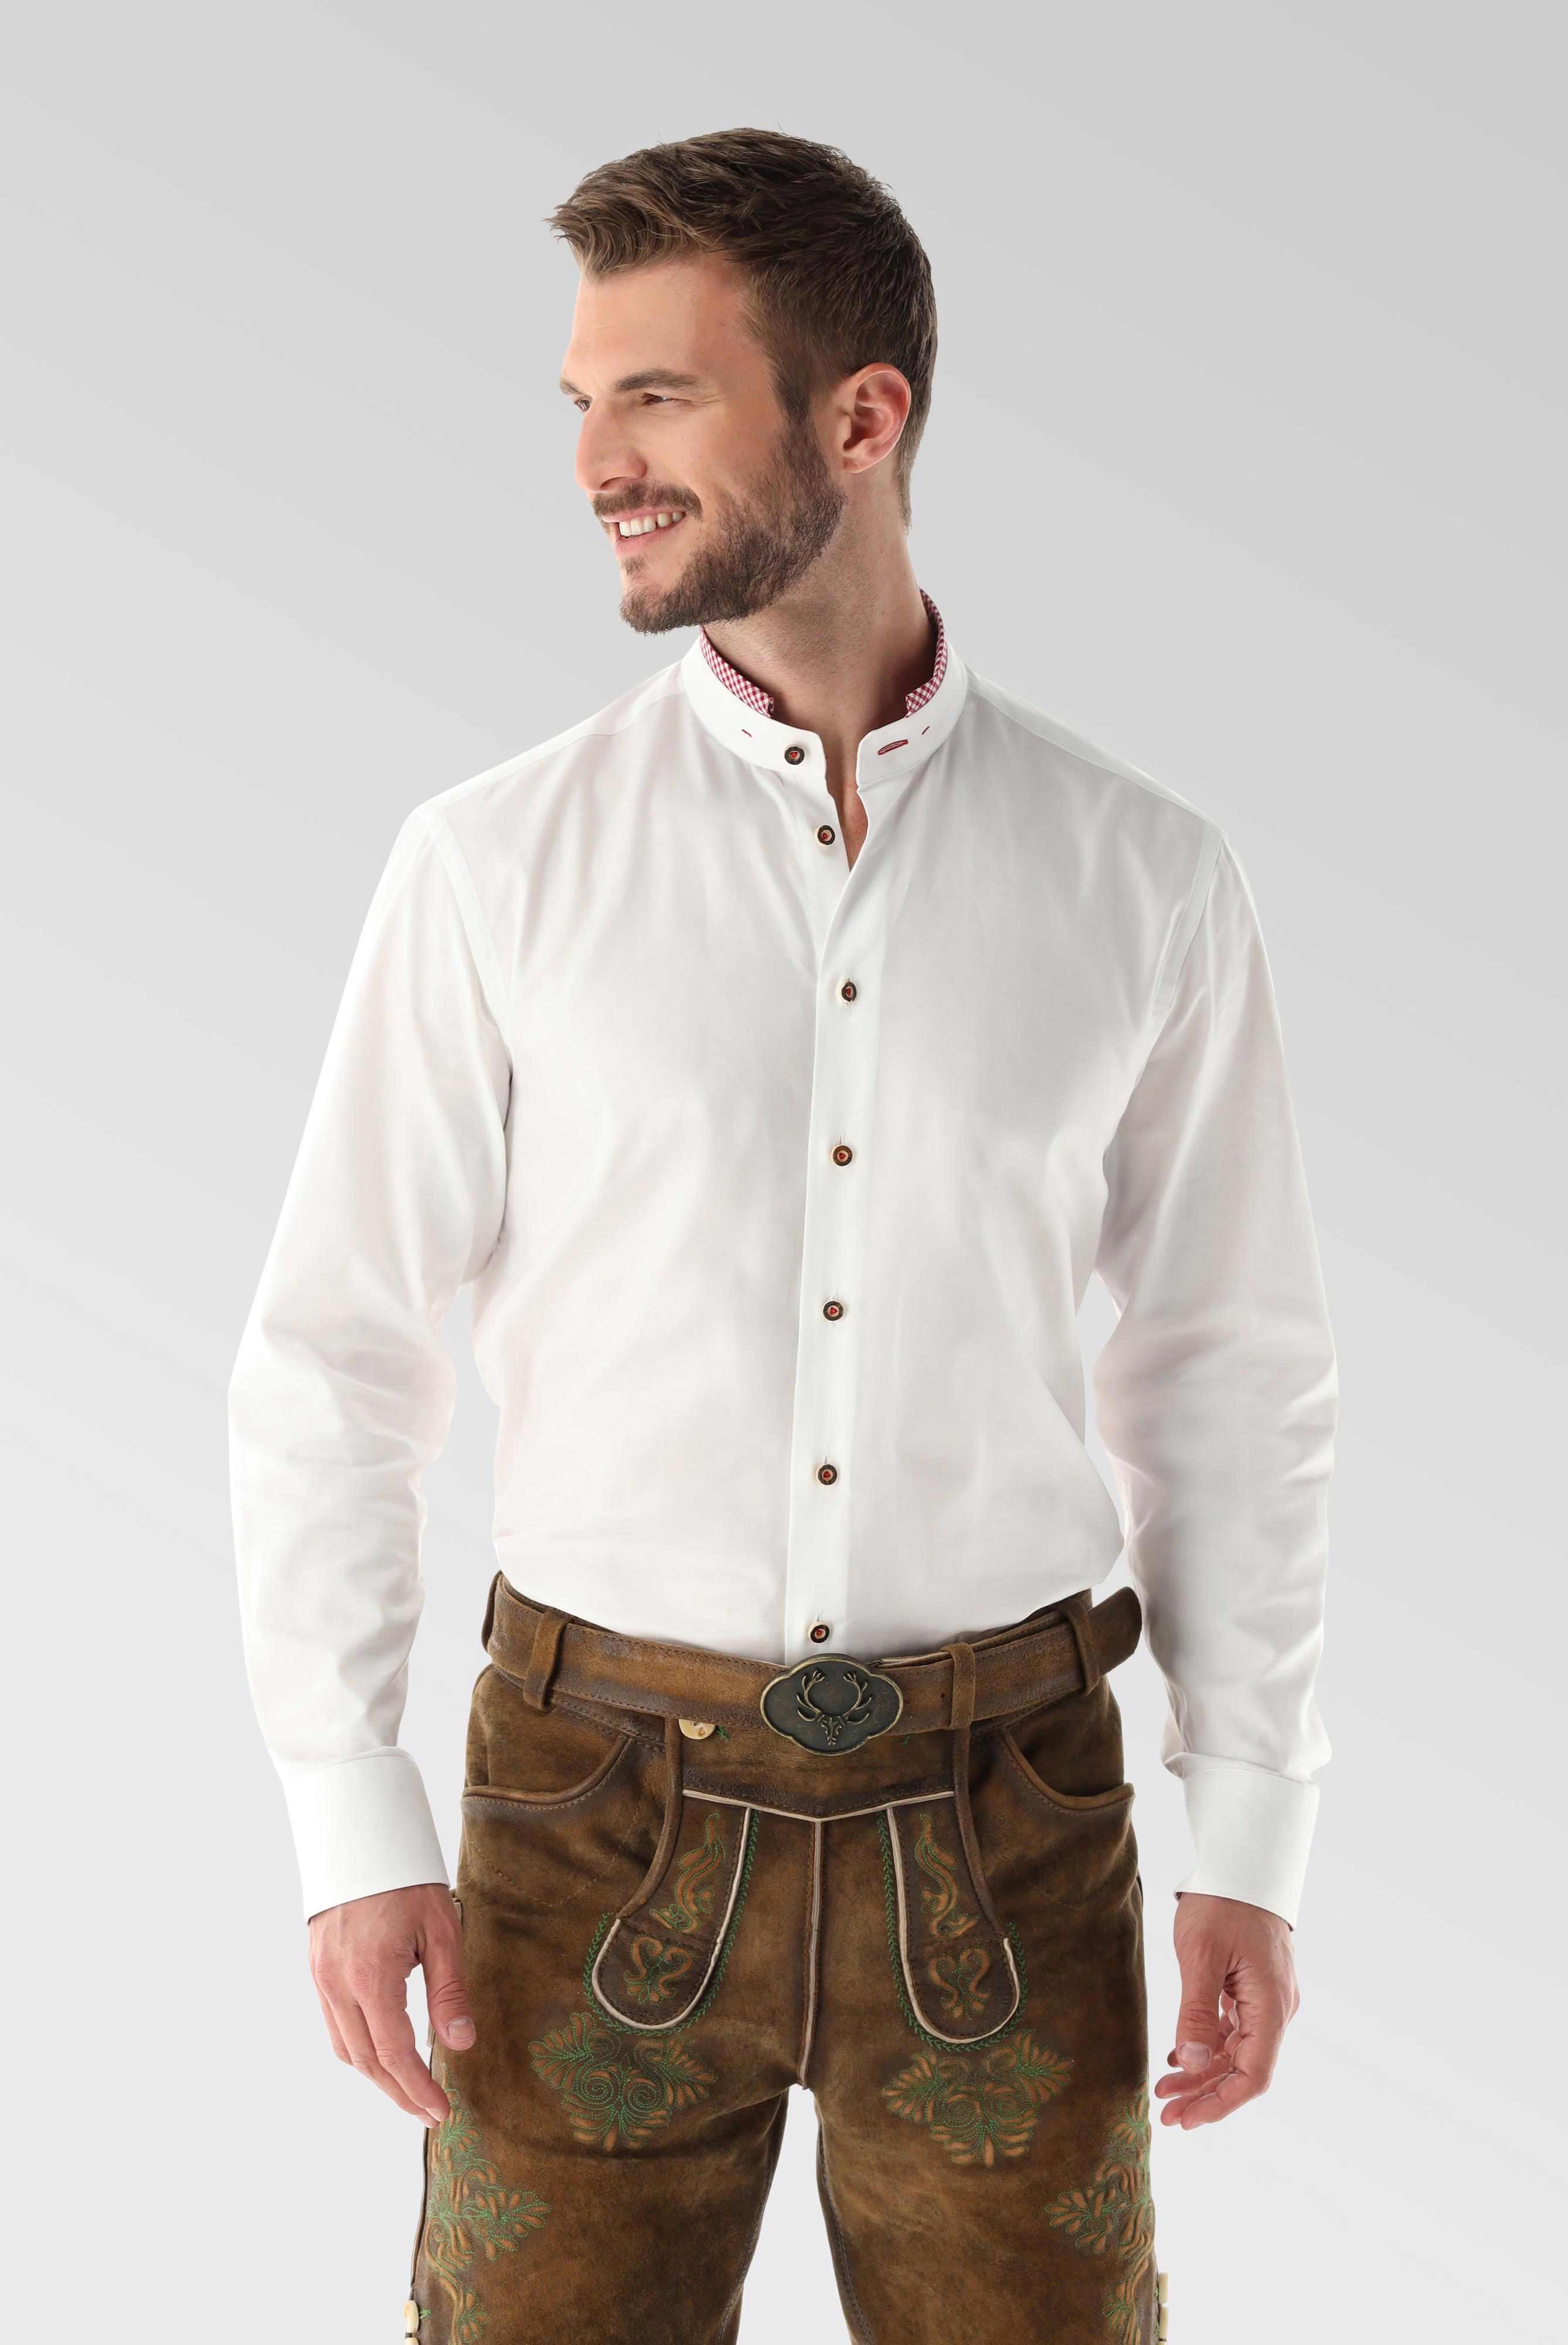 Festliche Hemden+Oxford Tradtional Shirt with coloured detail+20.2081.8Q.150251.005.39